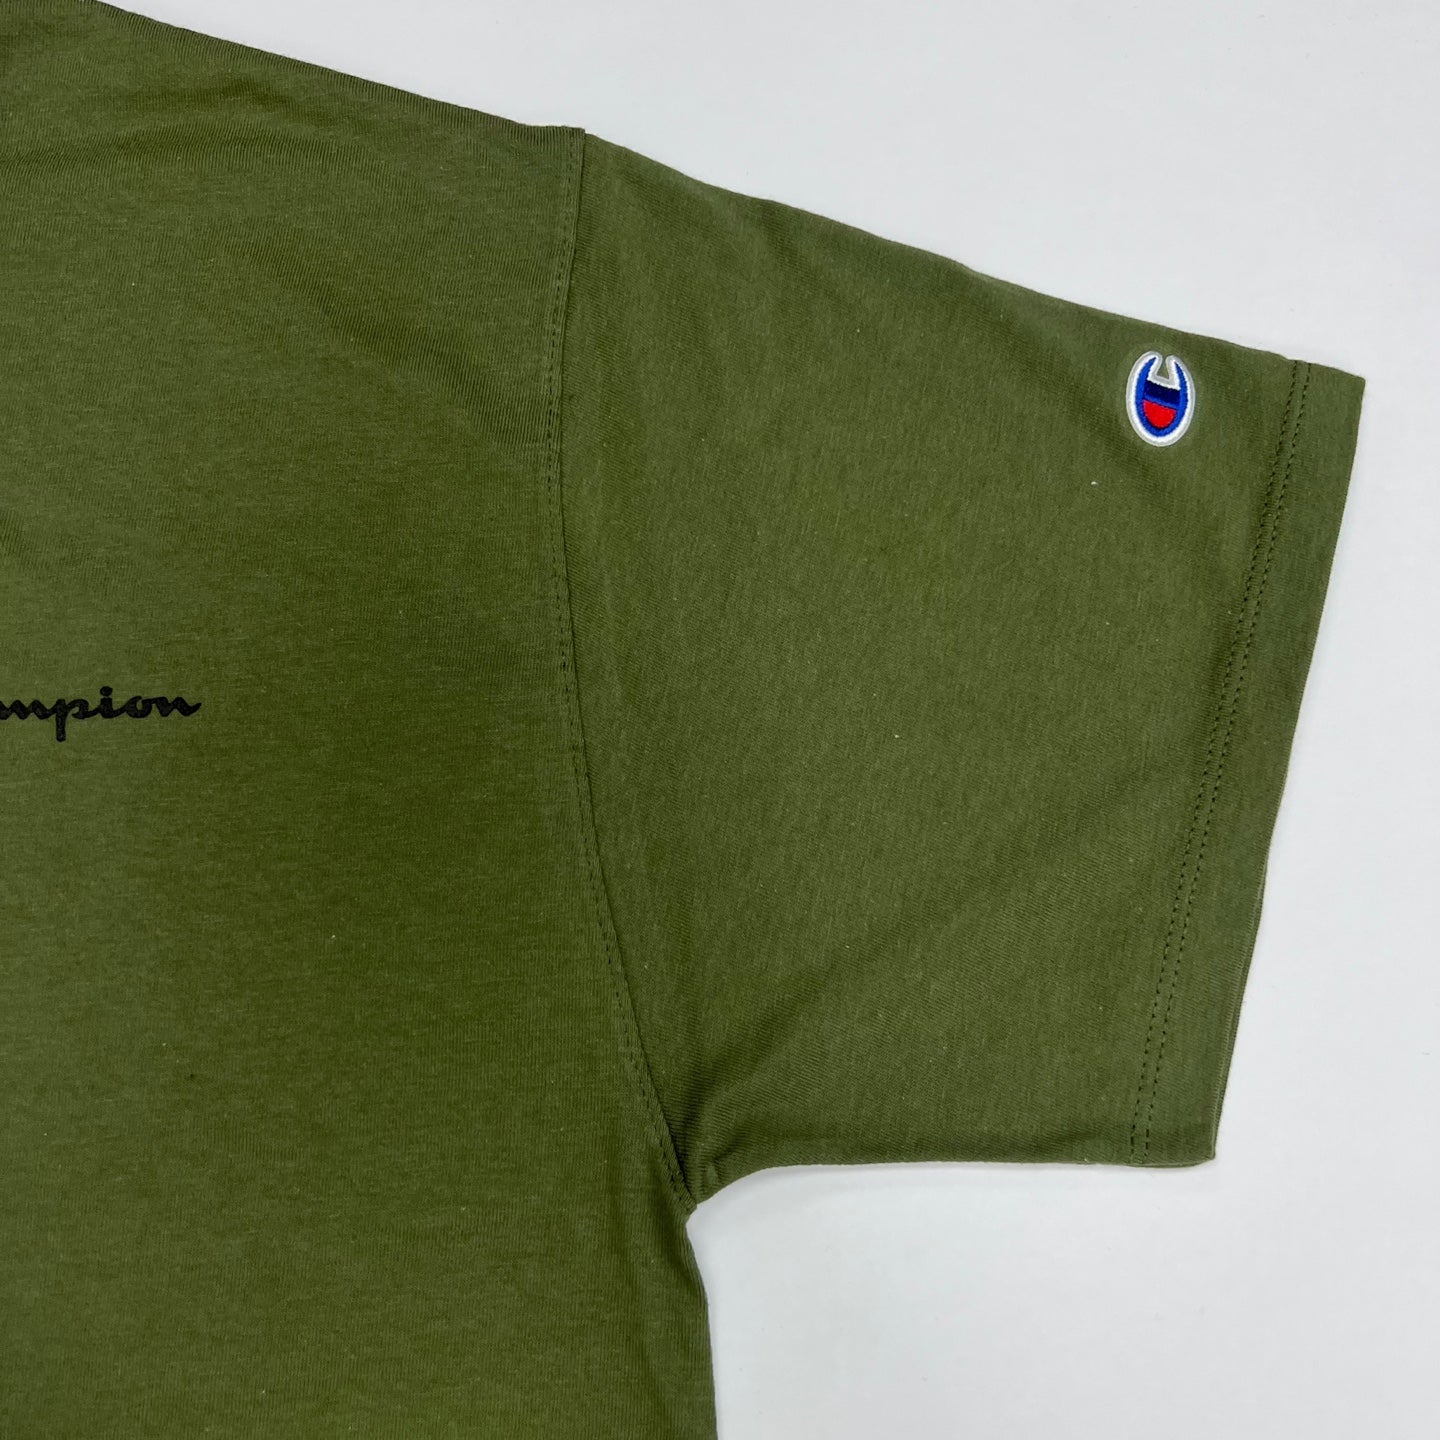 Champion Classic Logo Print T-Shirt